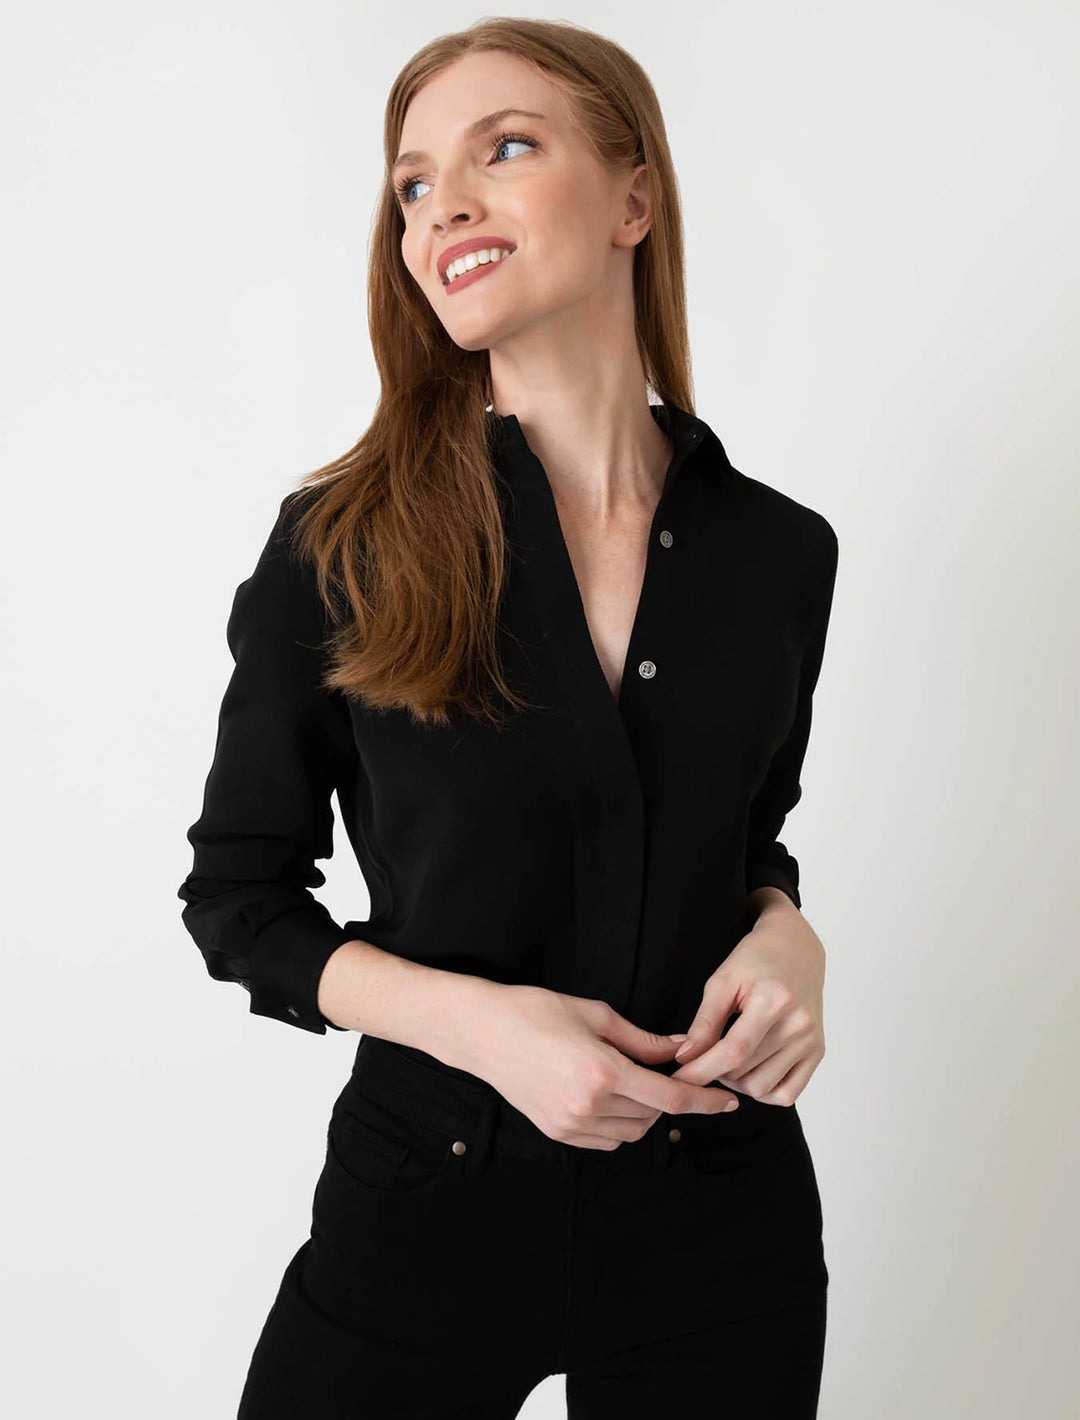 Model wearing Ann Mashburn's icon blouse in black.